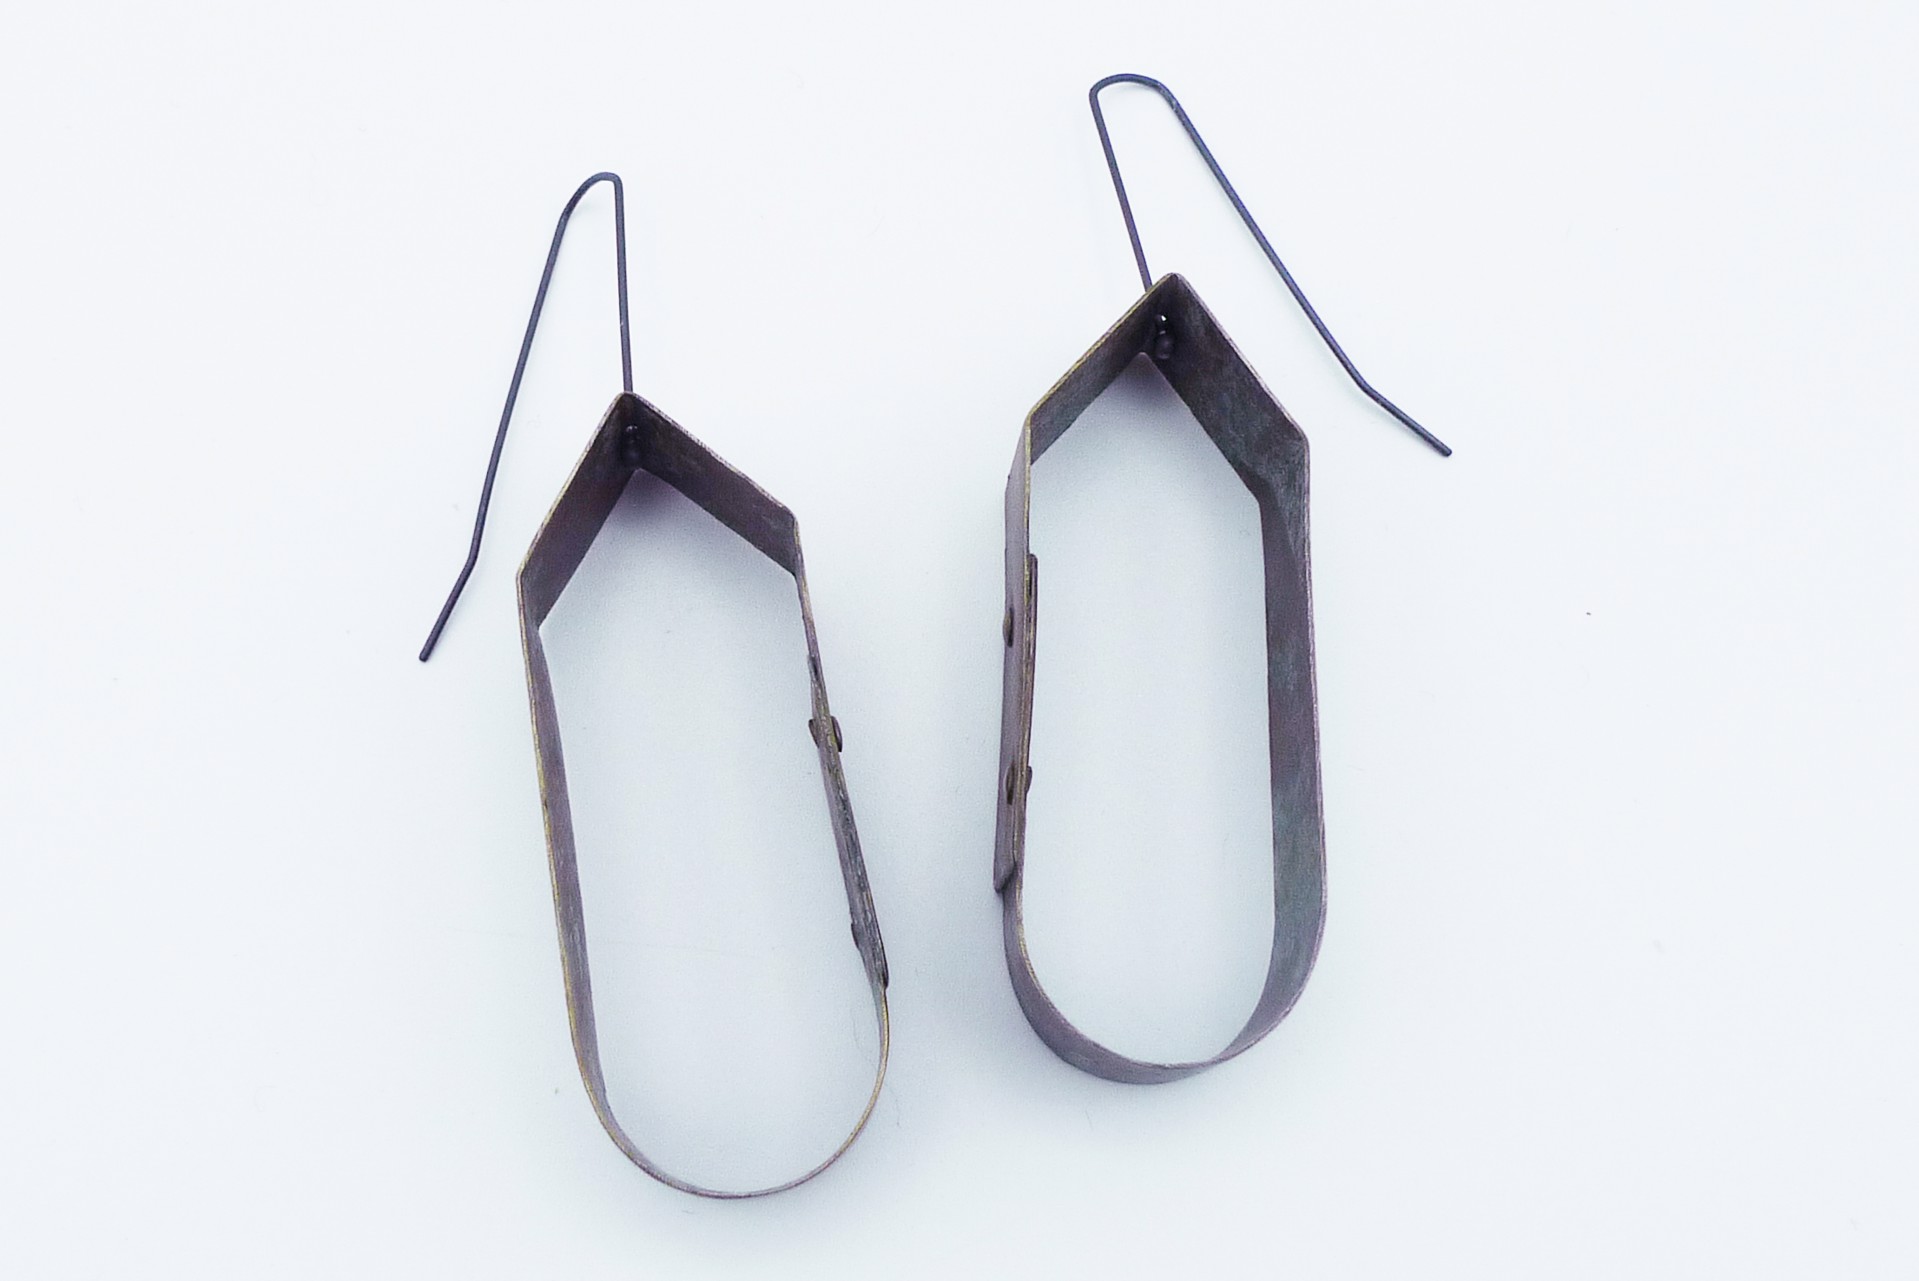 Riveted Frame Earrings by Juan Fried